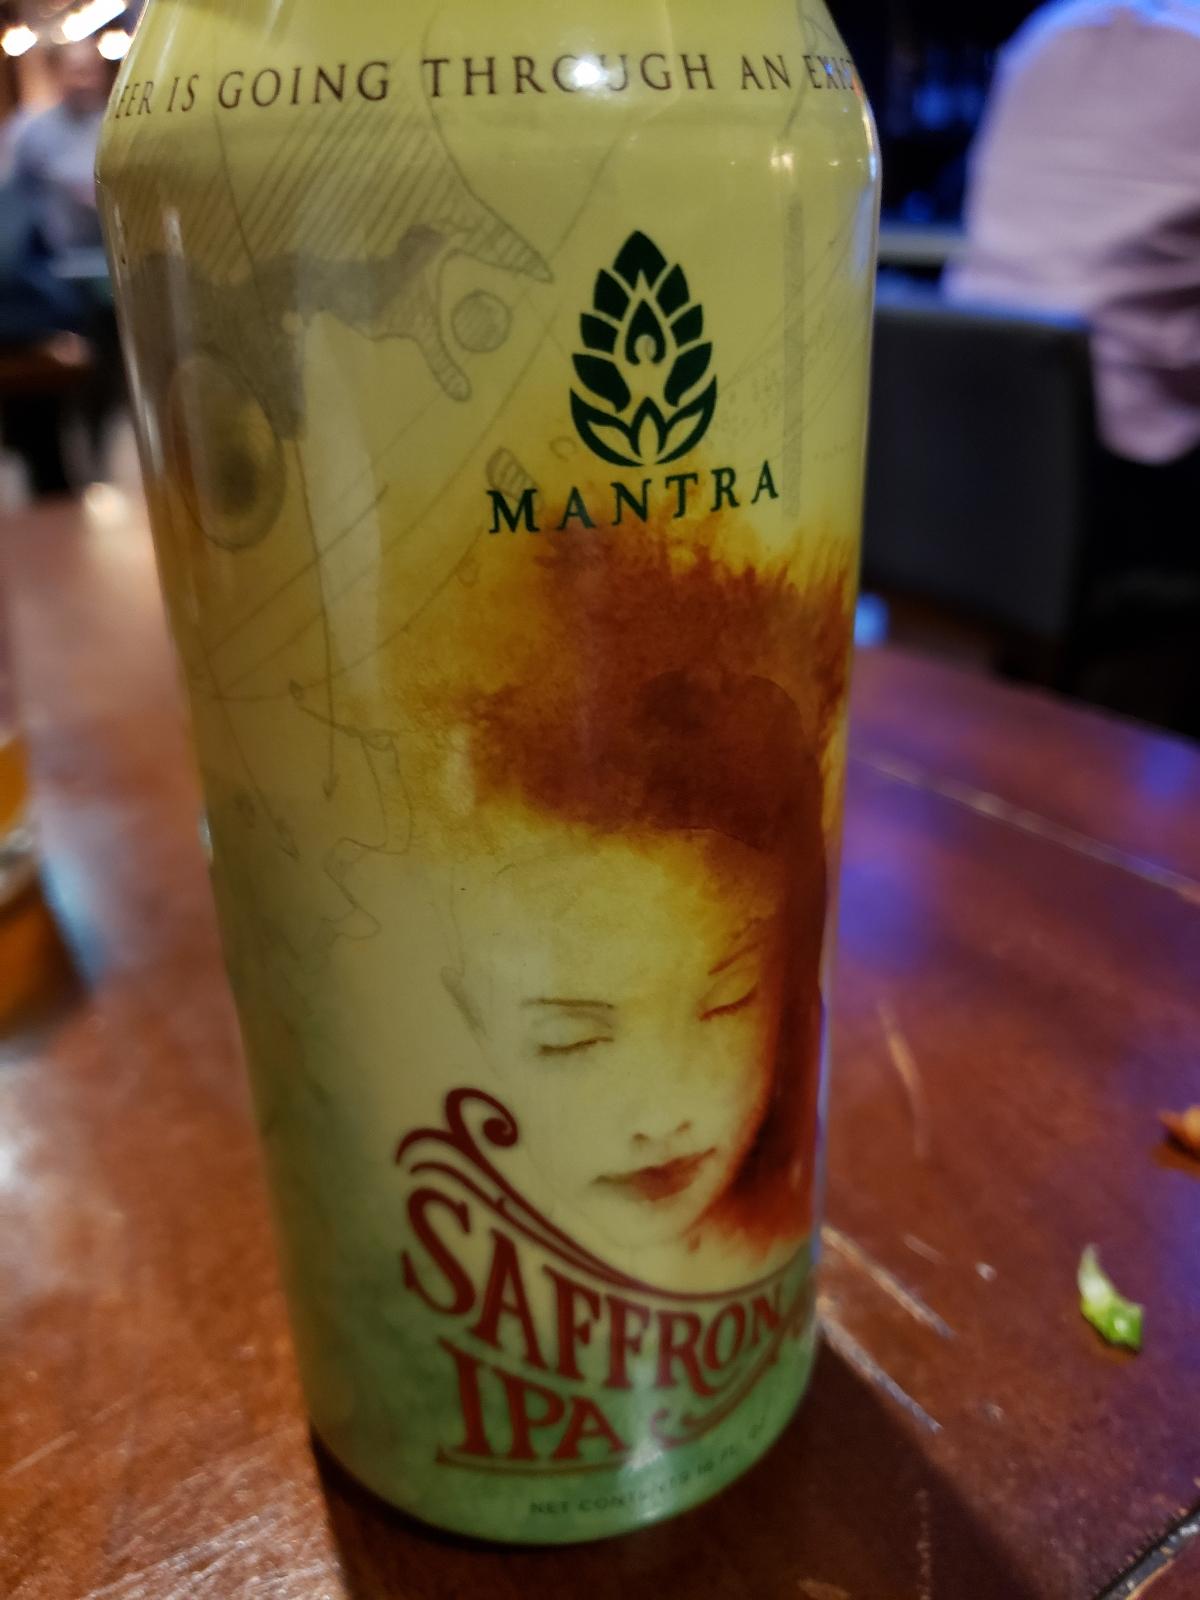 Saffron IPA